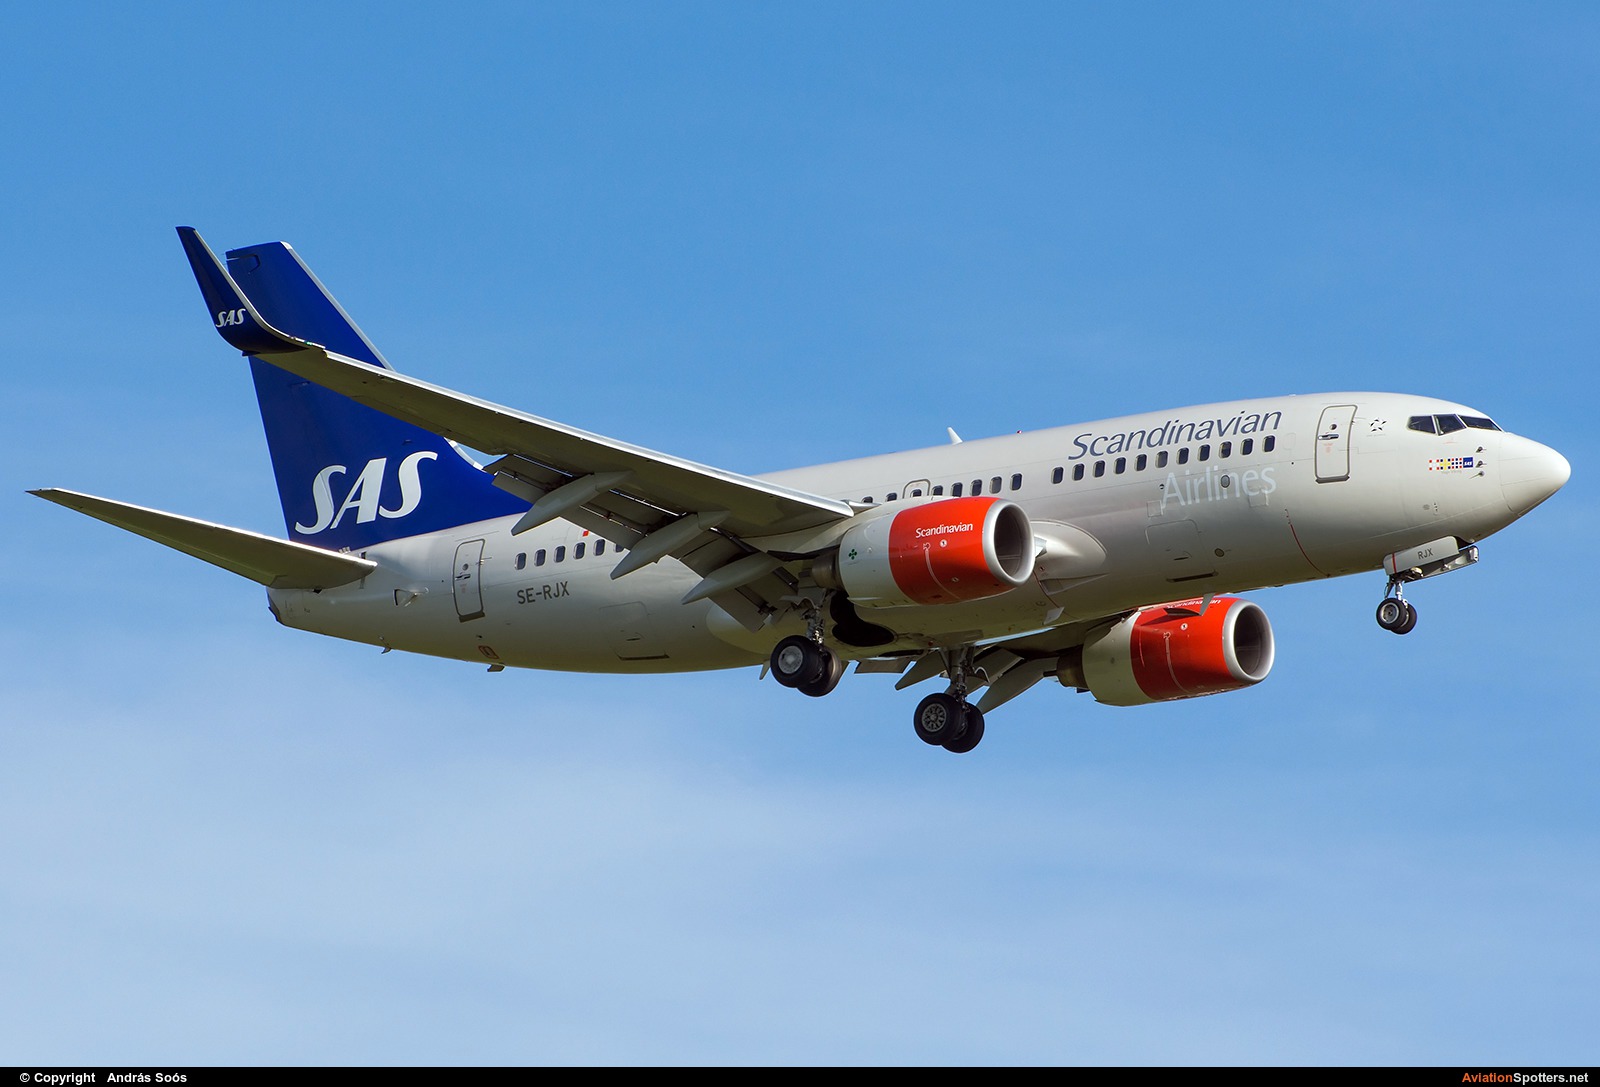 SAS - Scandinavian Airlines  -  737-700  (SE-RJX) By András Soós (sas1965)